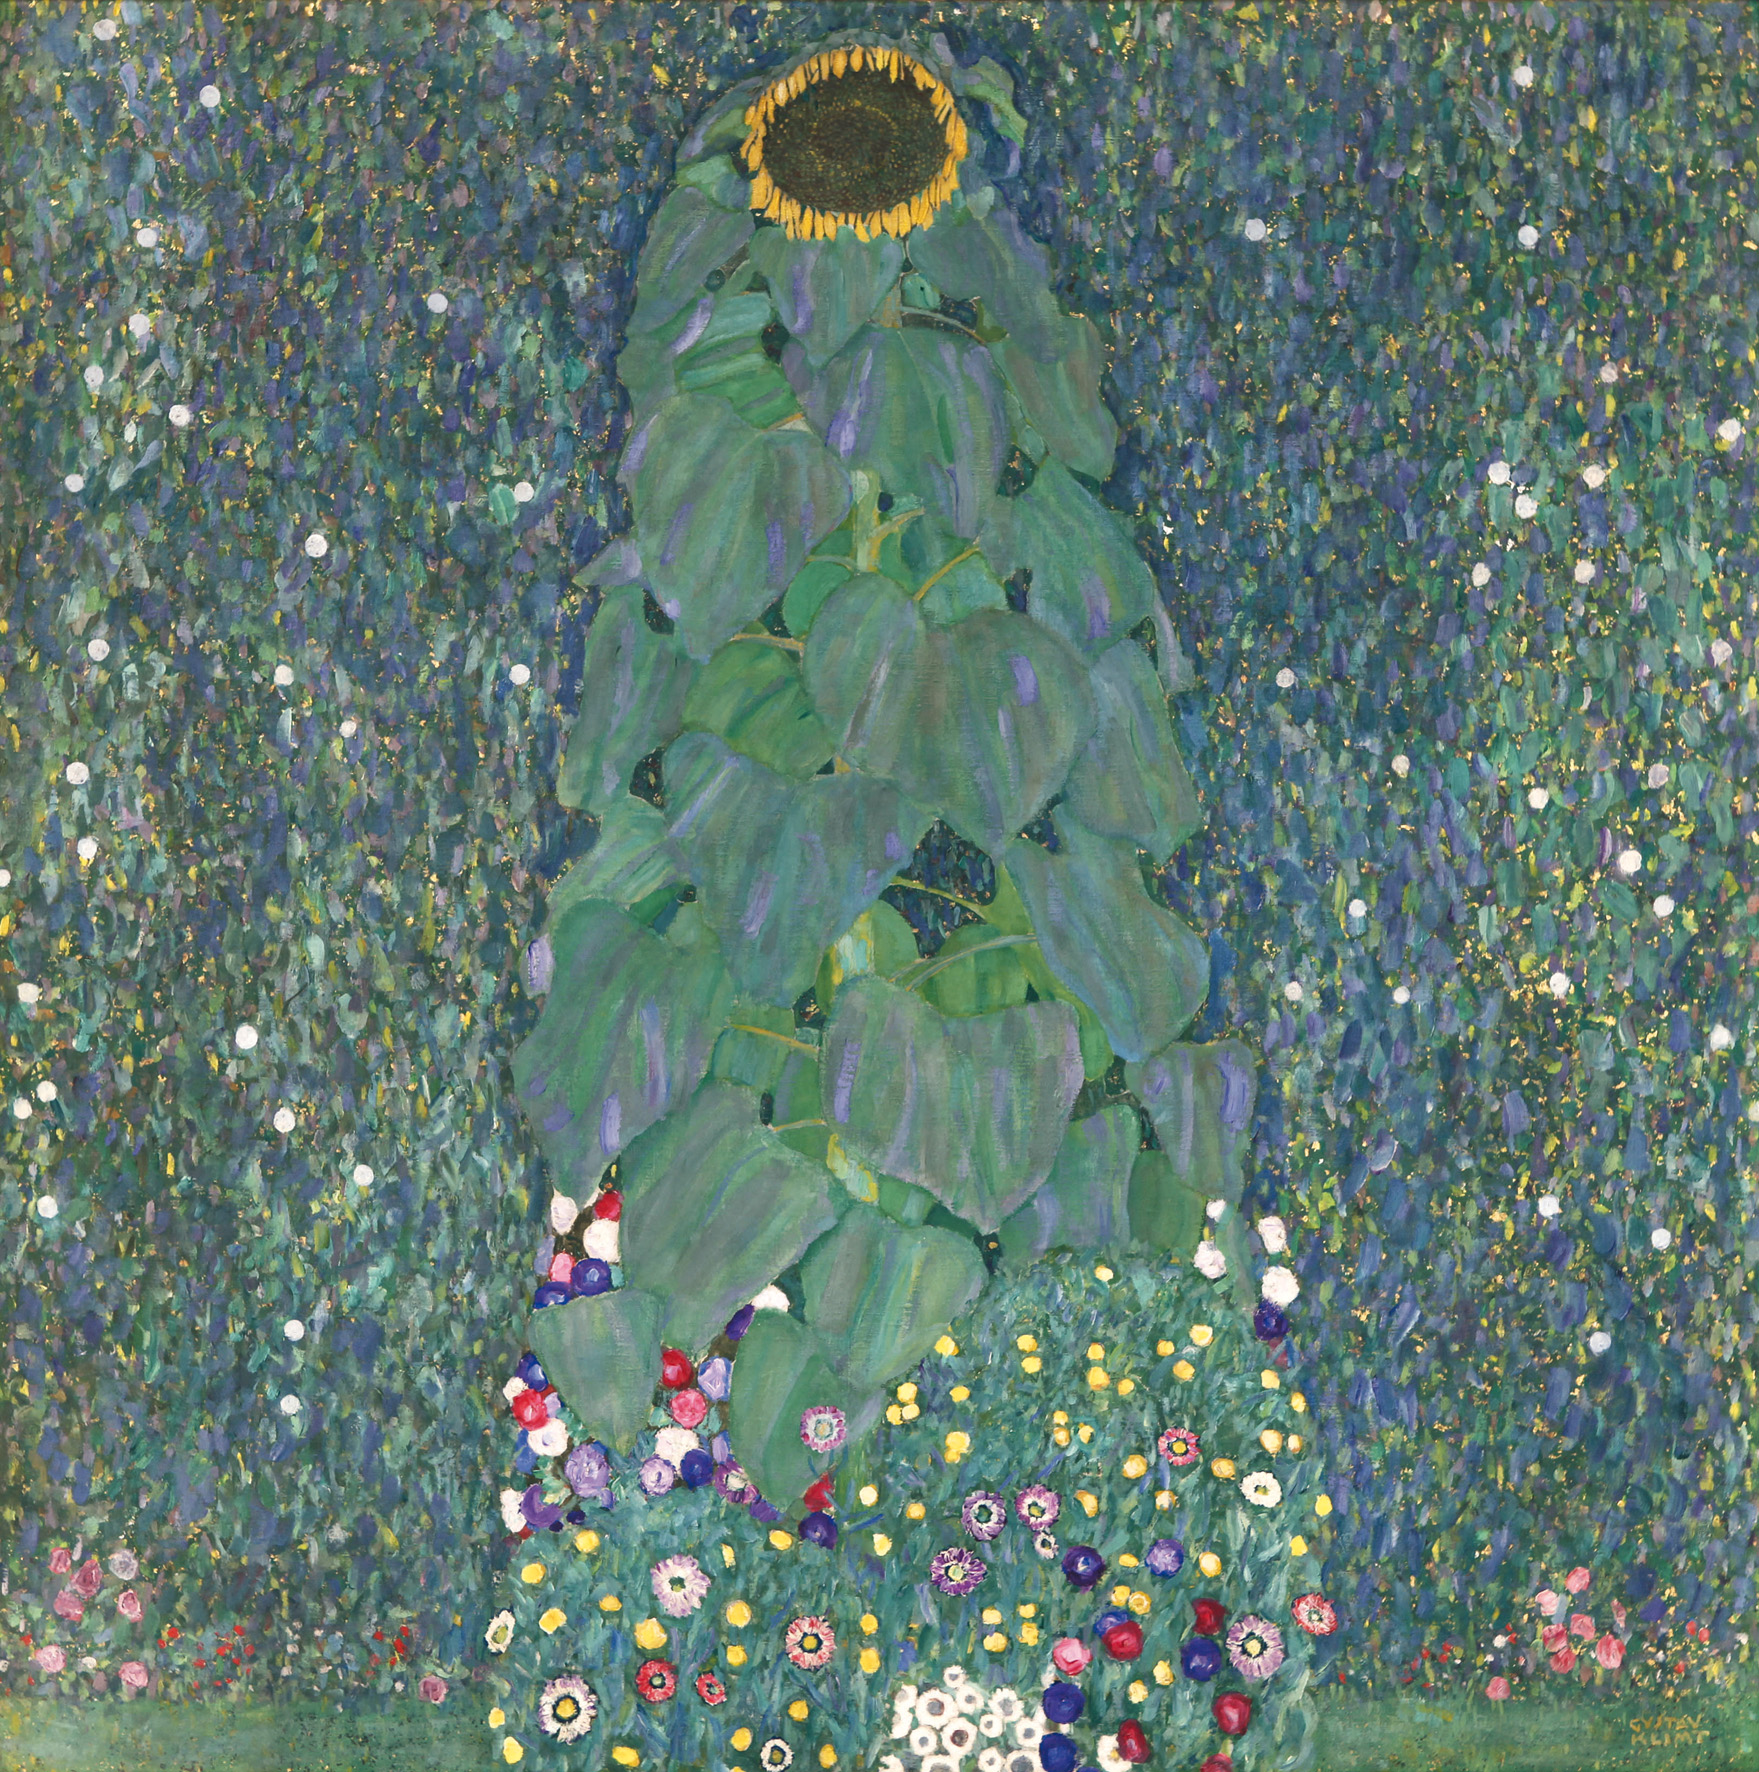 Mostre Milano 2014: aperture serali prolungate per Klimt e Kandinsky